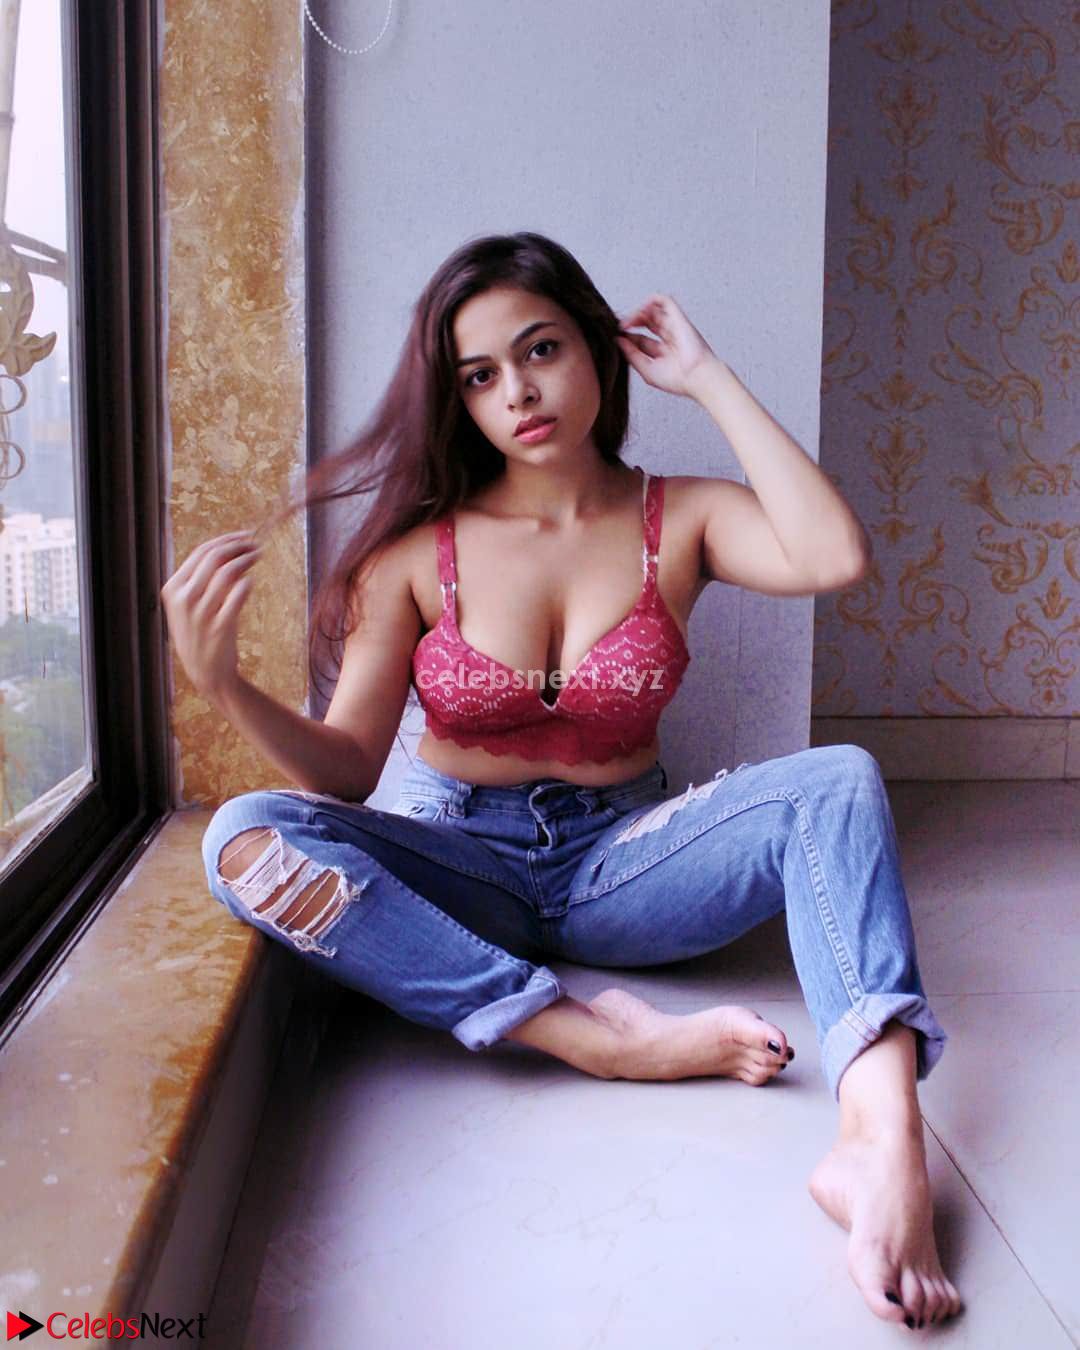 Ashwitha Stunning Indian Model Beautiful Bikini Pics June 2018 .xyz Exclusi...